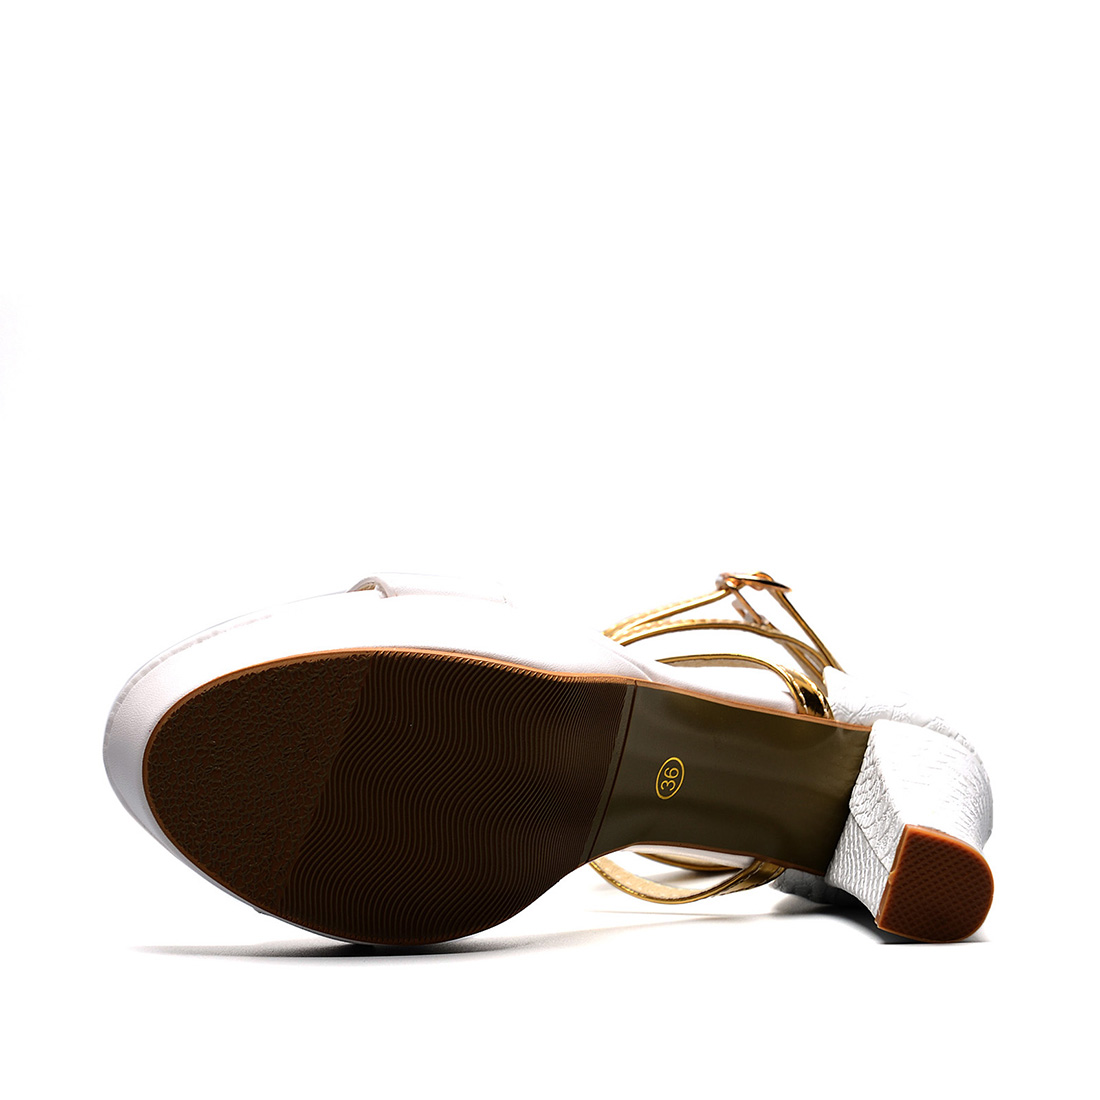 [Fovilla]欧美风皮带扣牛皮革凉鞋(尺码标准)
编号：A0693L1A17